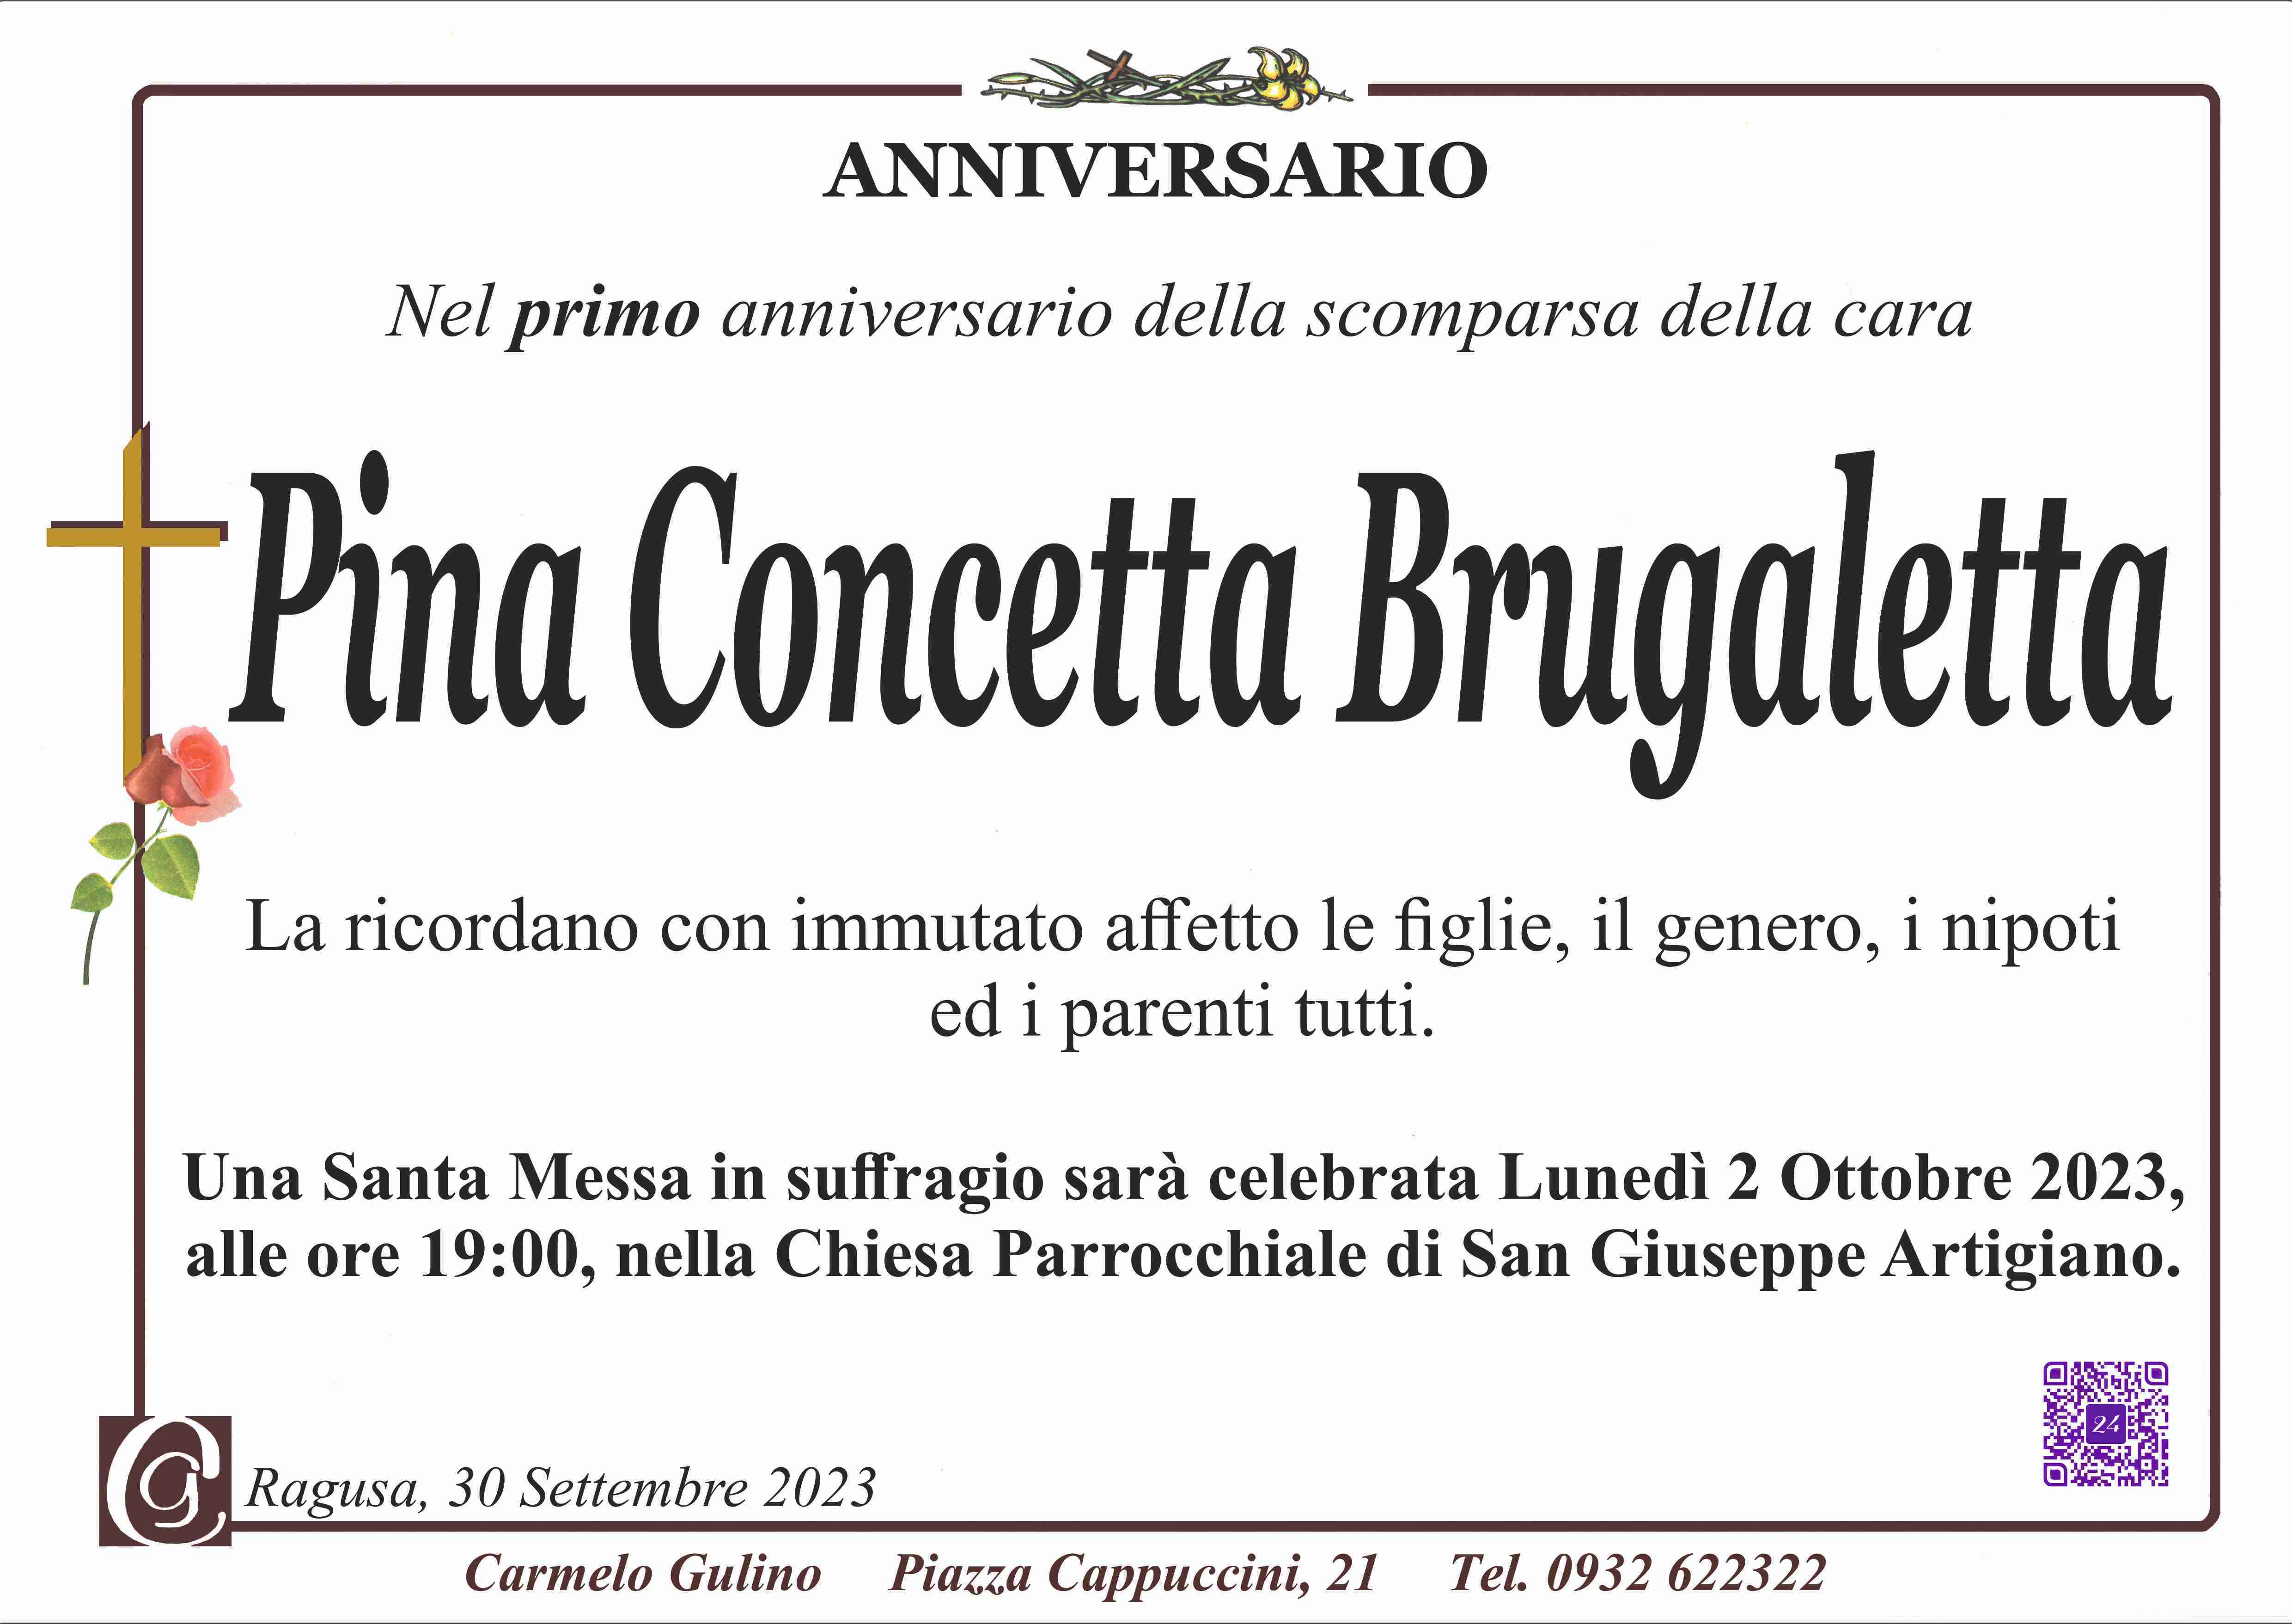 Pina Concetta Brugaletta